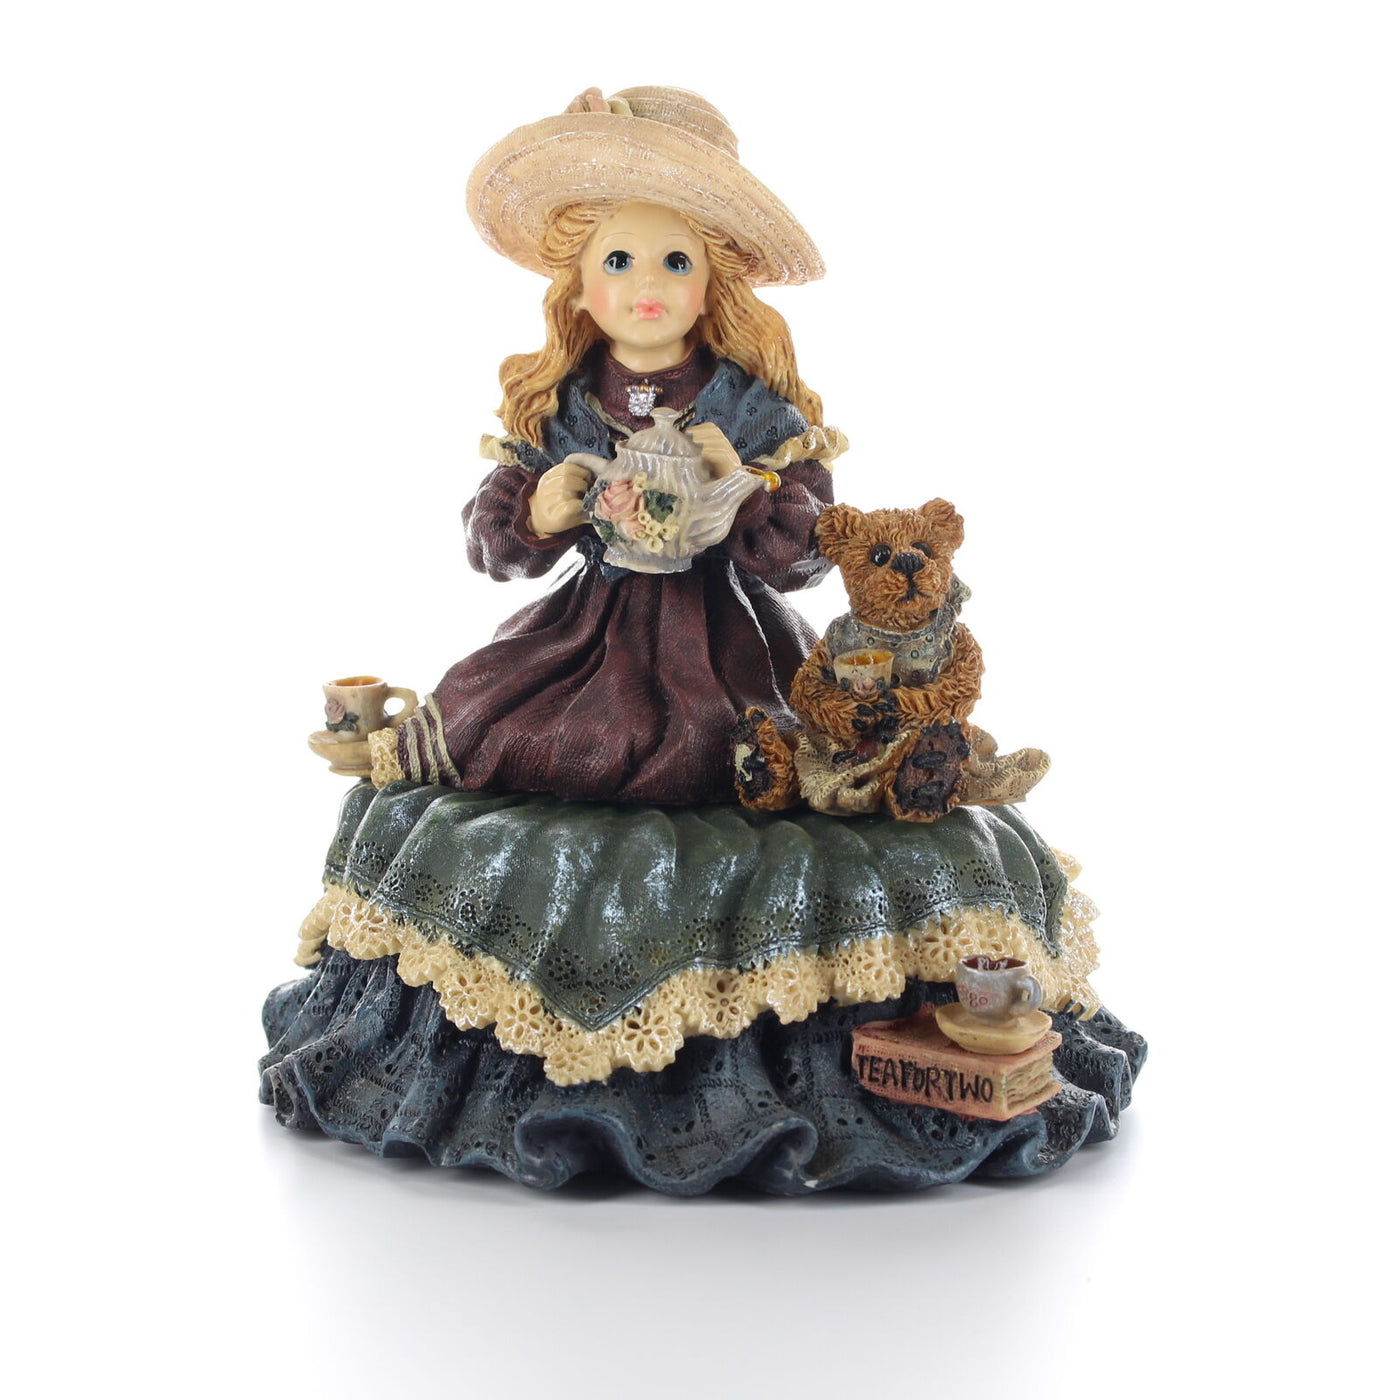 Boyds Bears Figurine Yesterdays Child Vintage Dollstone Tea For Two Style 272001